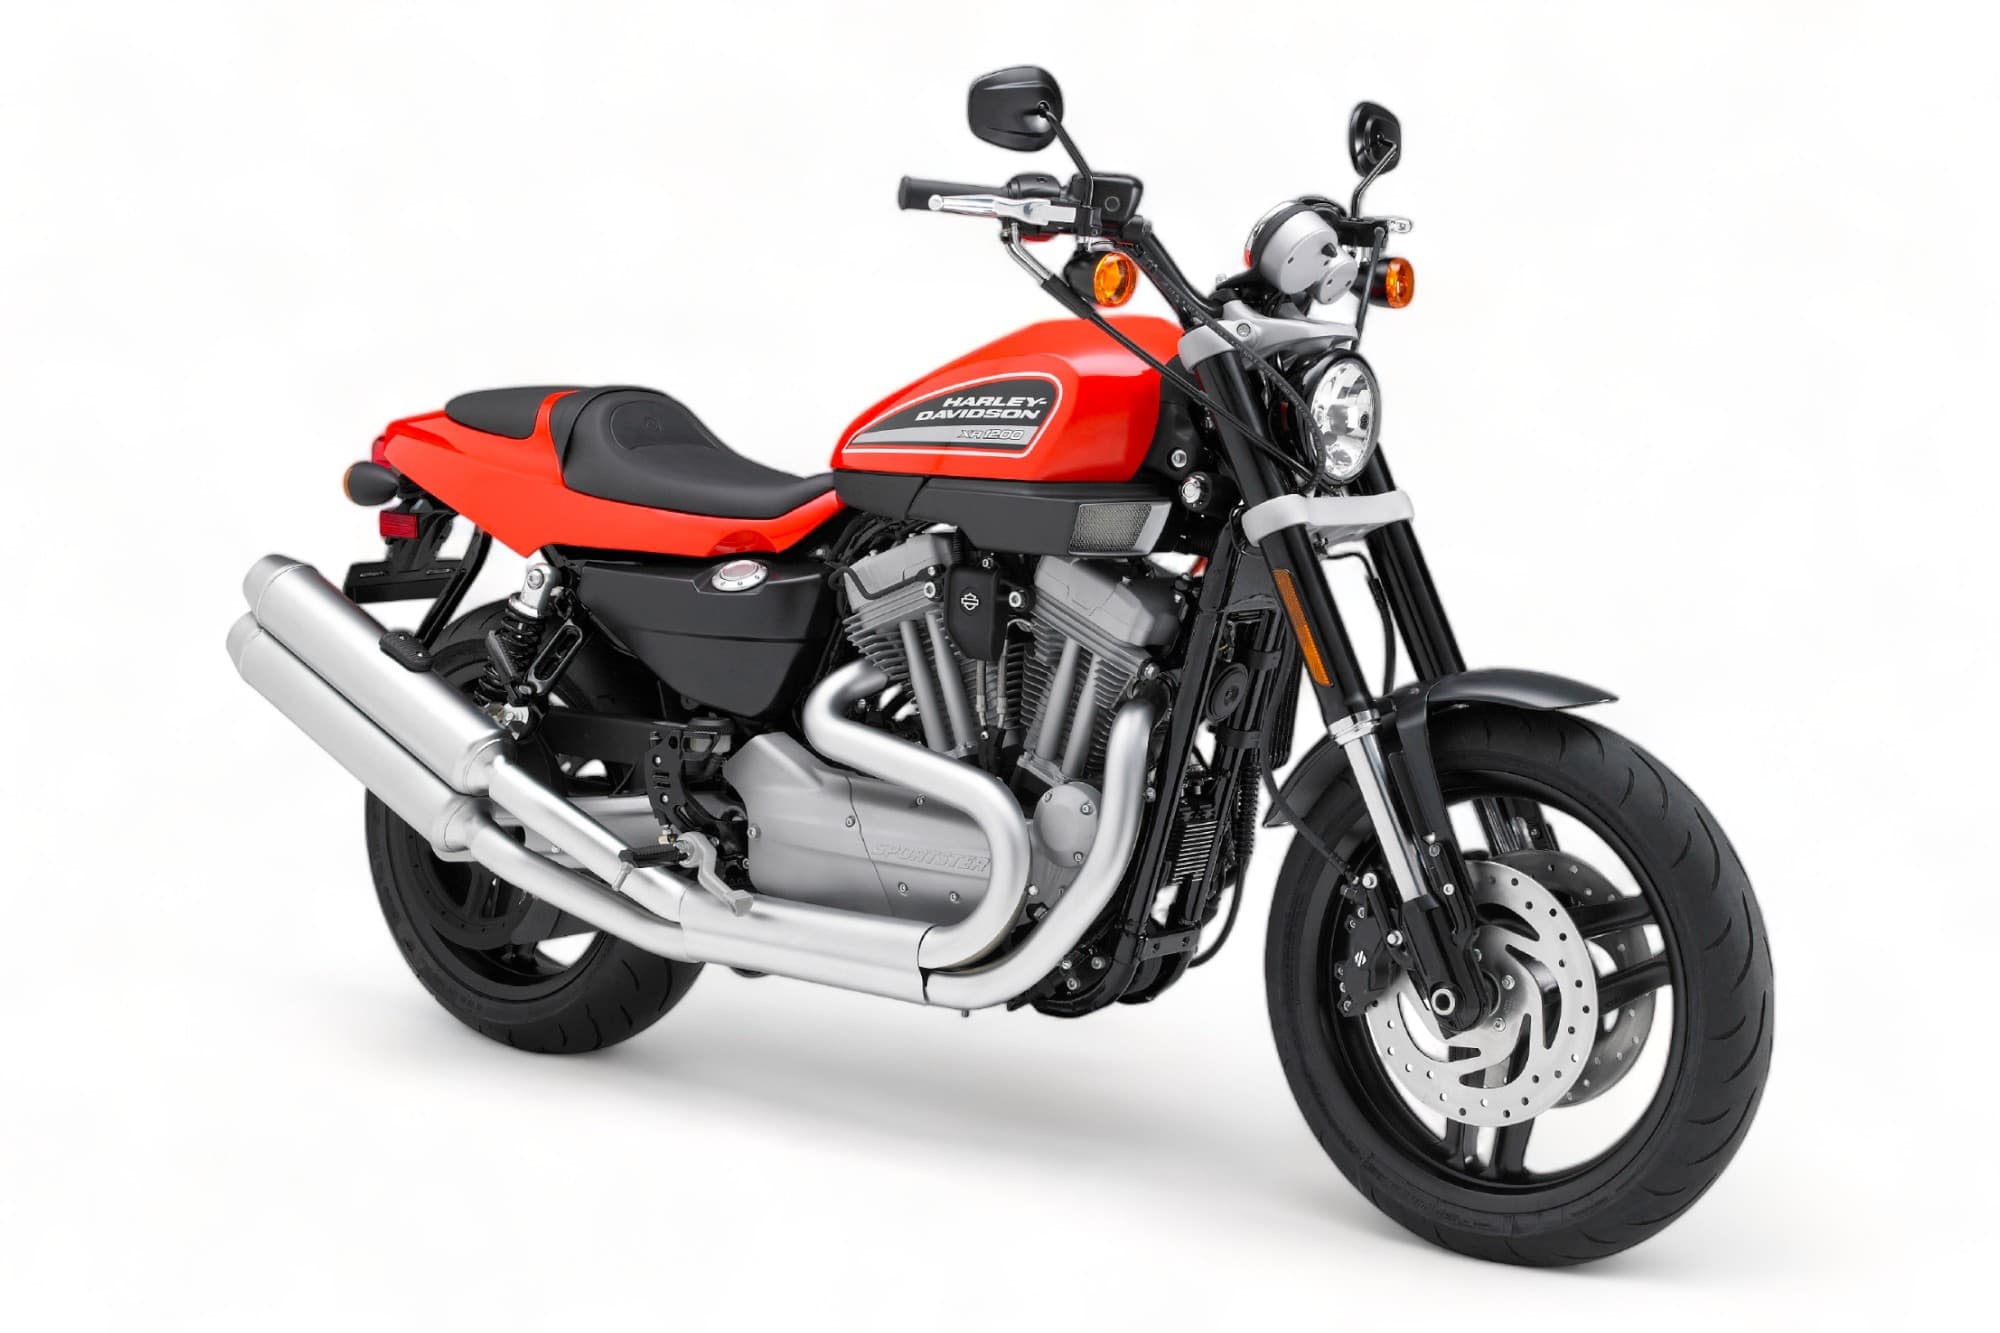 Harley-Davidson XR1200 RHS 3-4 studio